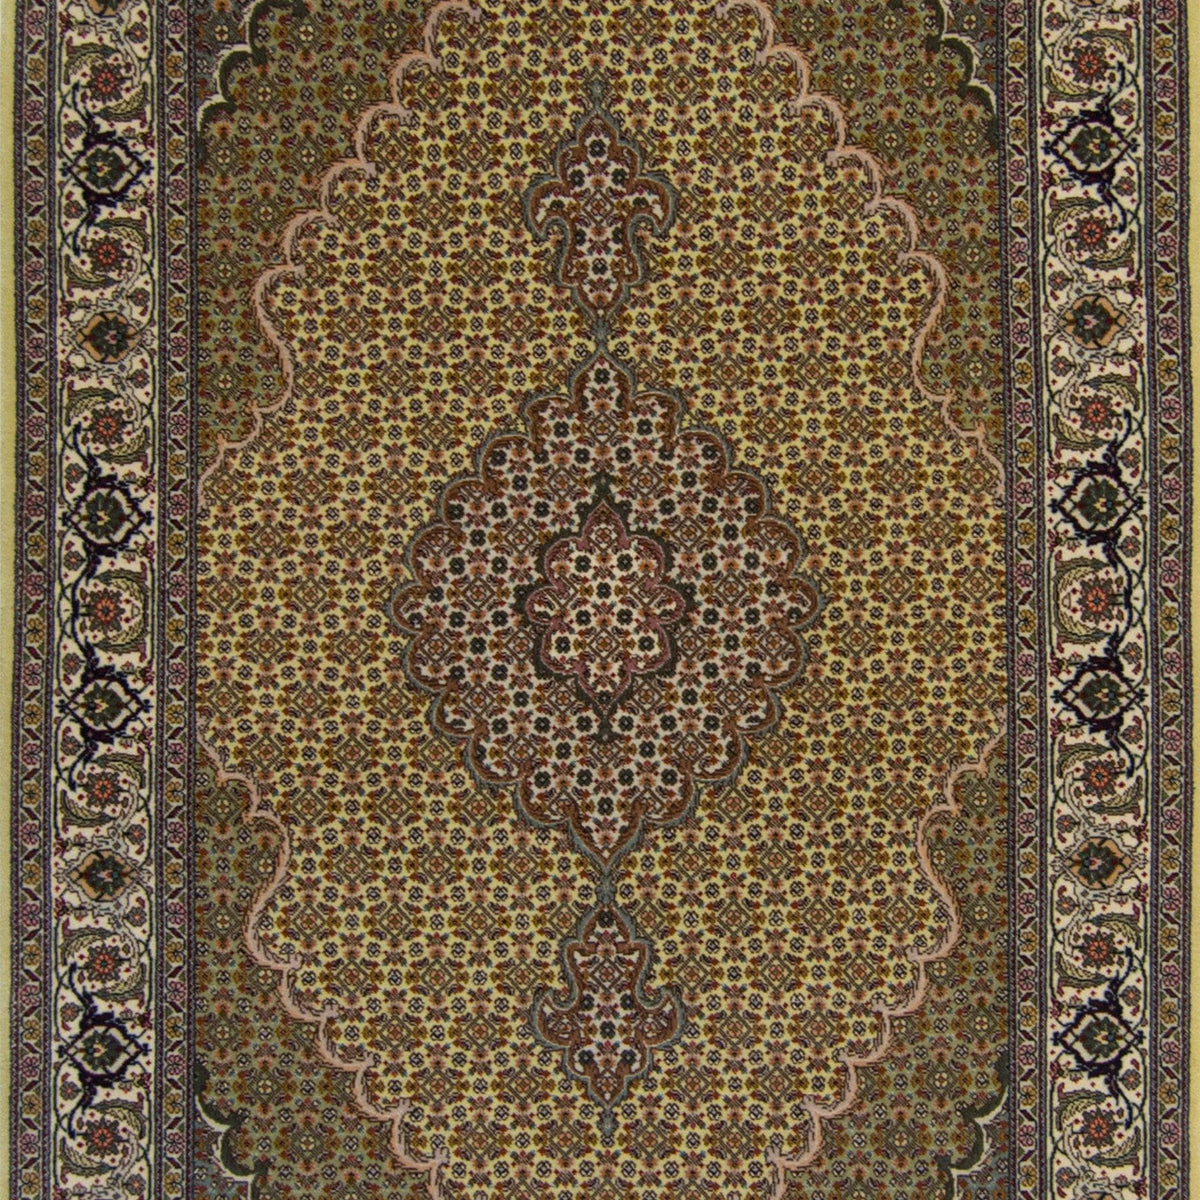 Fine Hand-knotted Persian Wool and Silk Tabriz - Mahi Rug 101cm x 155cm